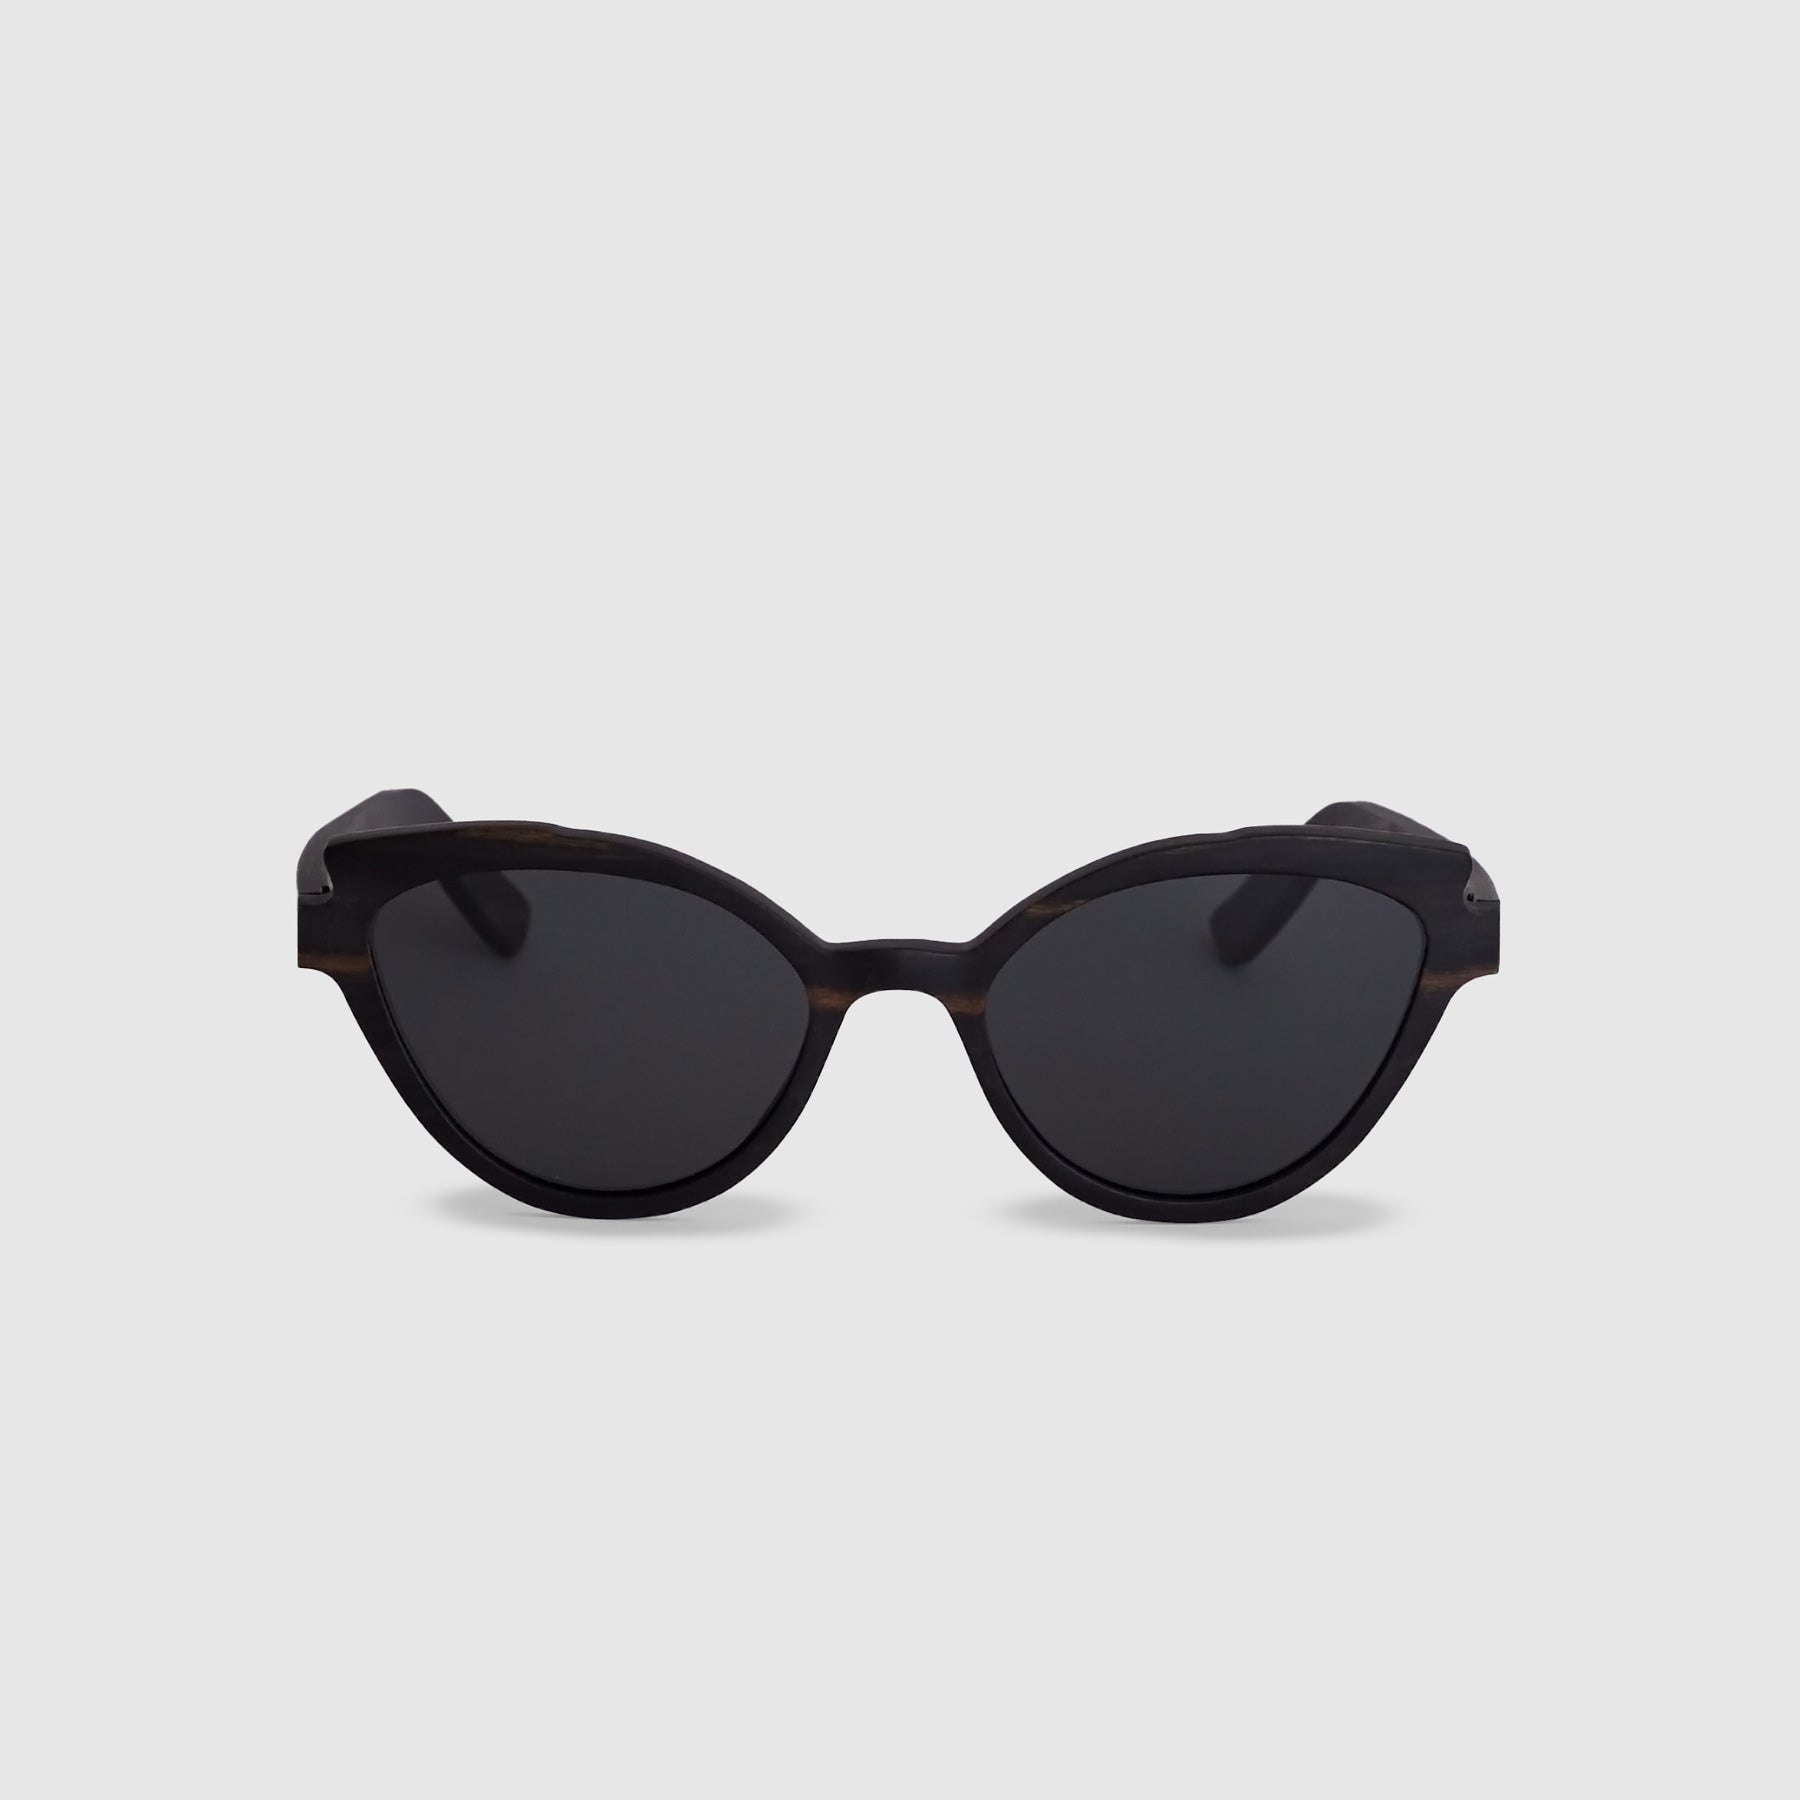 Van der Woodsen | Black & Ebony Wood Sunglasses Front